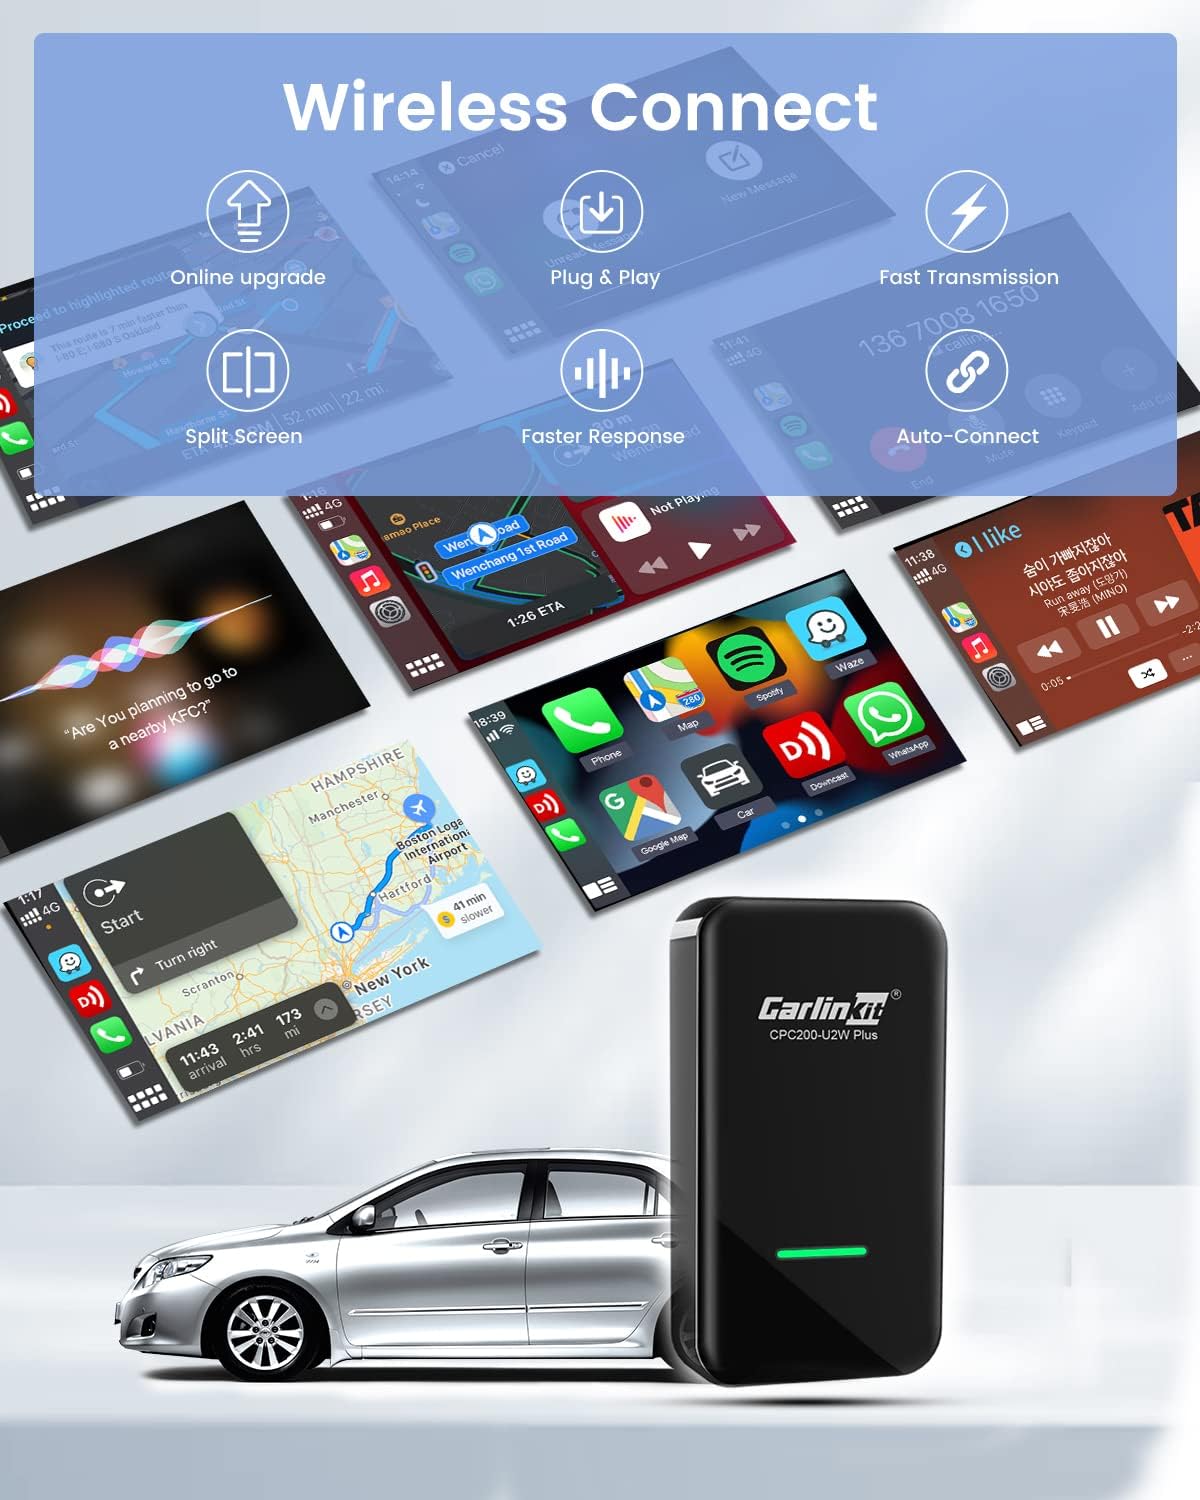 Aespa Wireless Carplay Adapter Carlinkit 4.0 Wired To Wireless Carplay  Cpc200-u2w Plus Car Mp5 Player Gps Mp3 For Universal